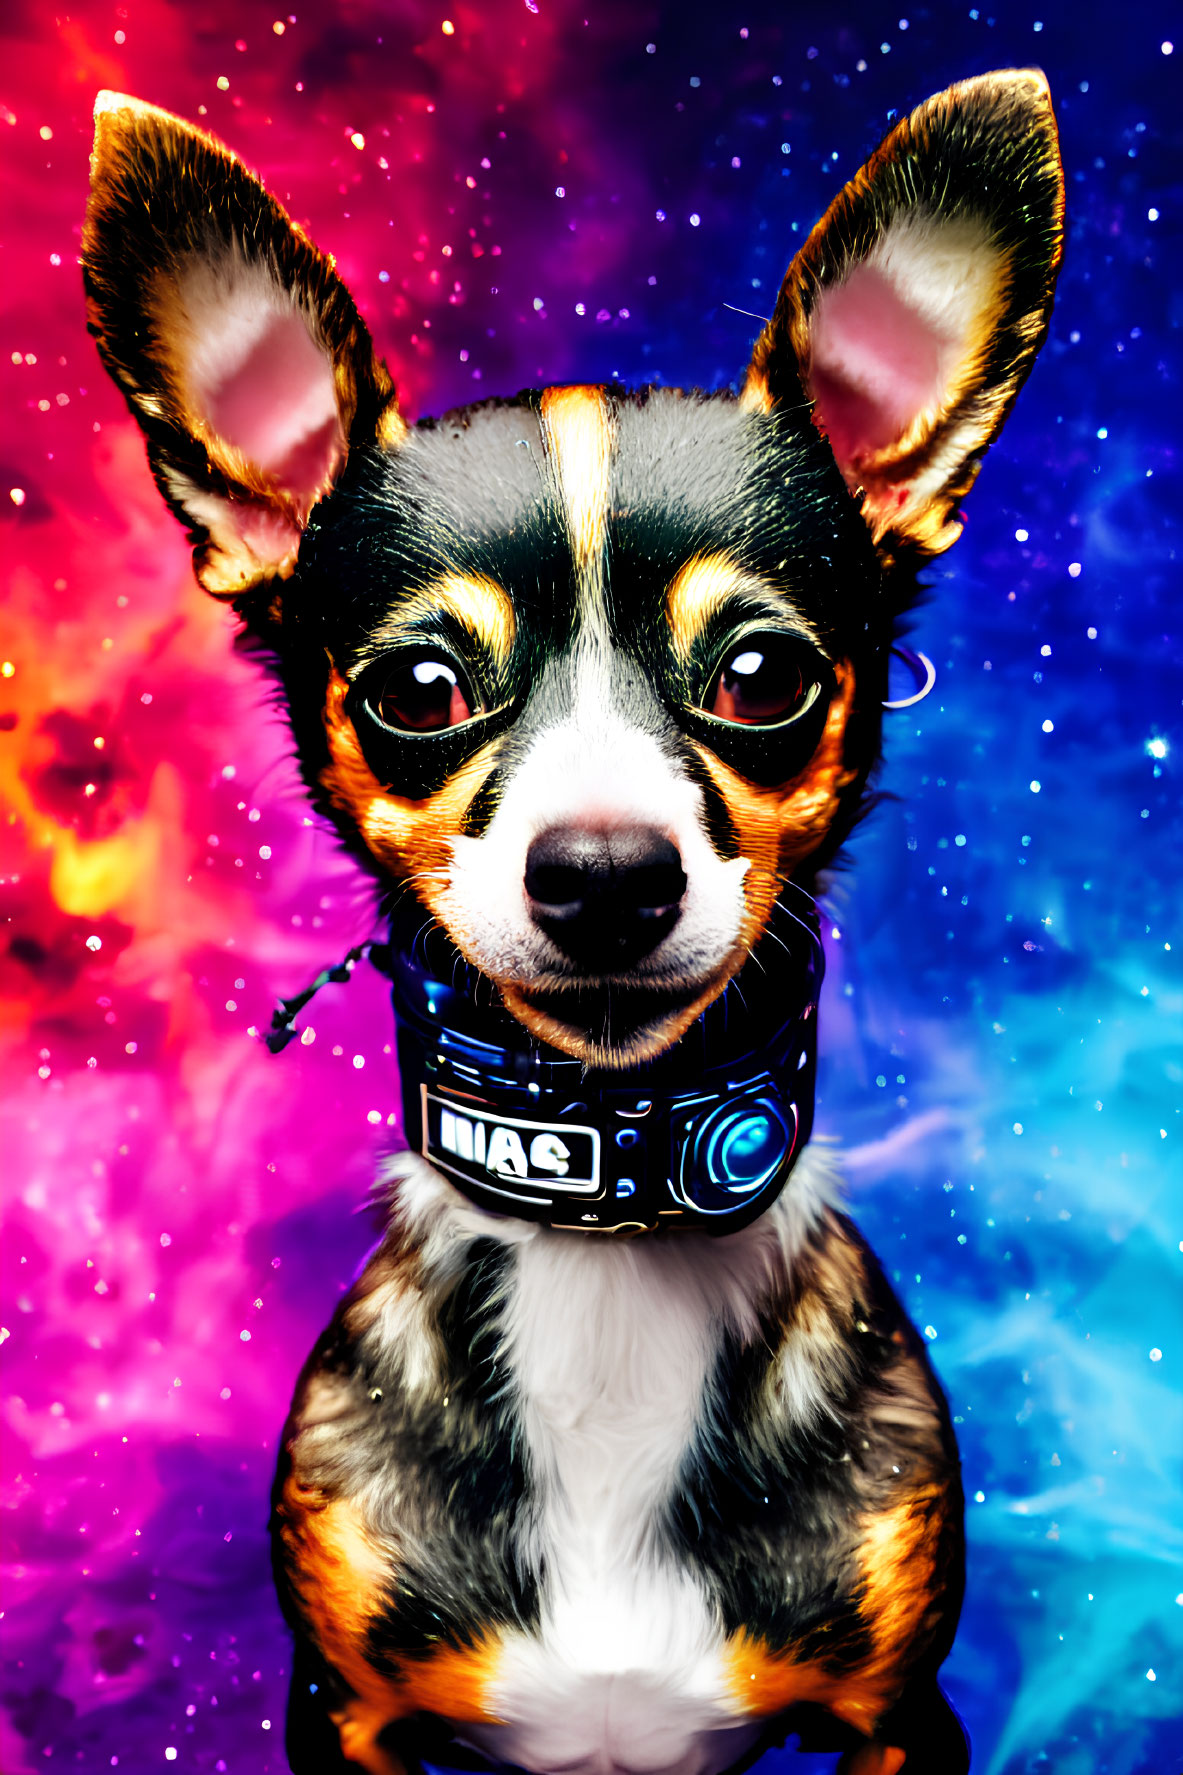 Colorful Digital Art of Chihuahua in Futuristic Collar